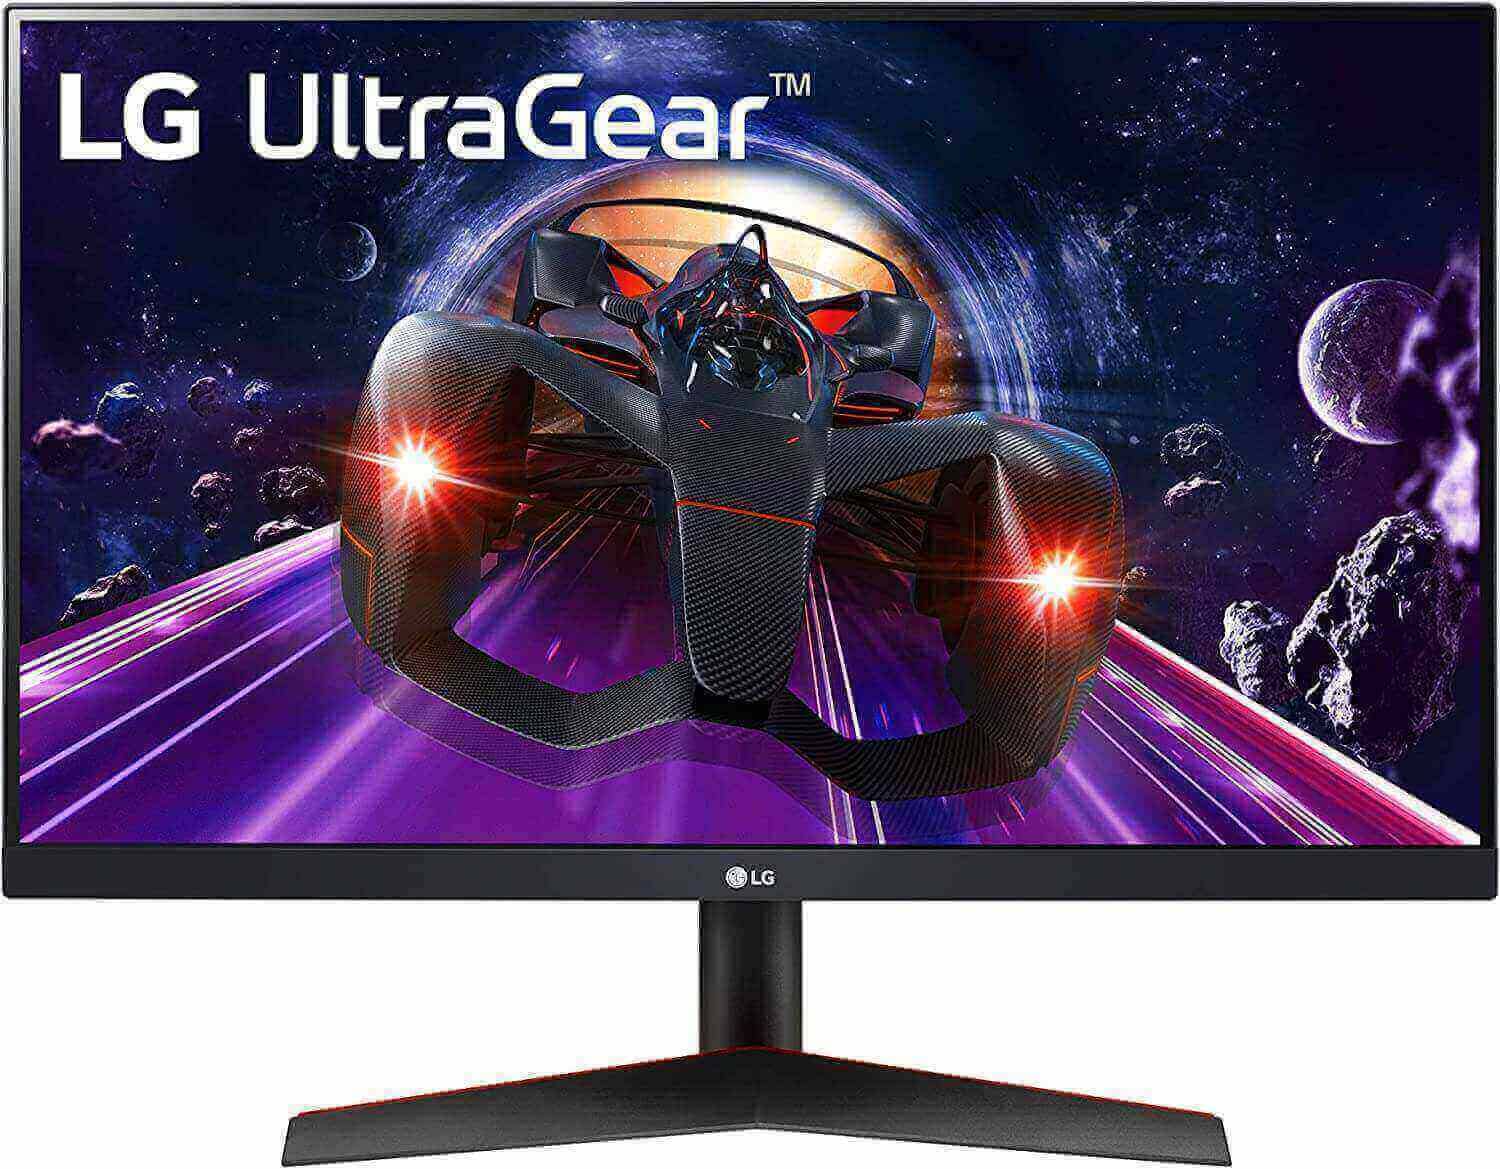 LG 24GN600-B UltraGear Gaming Monitor